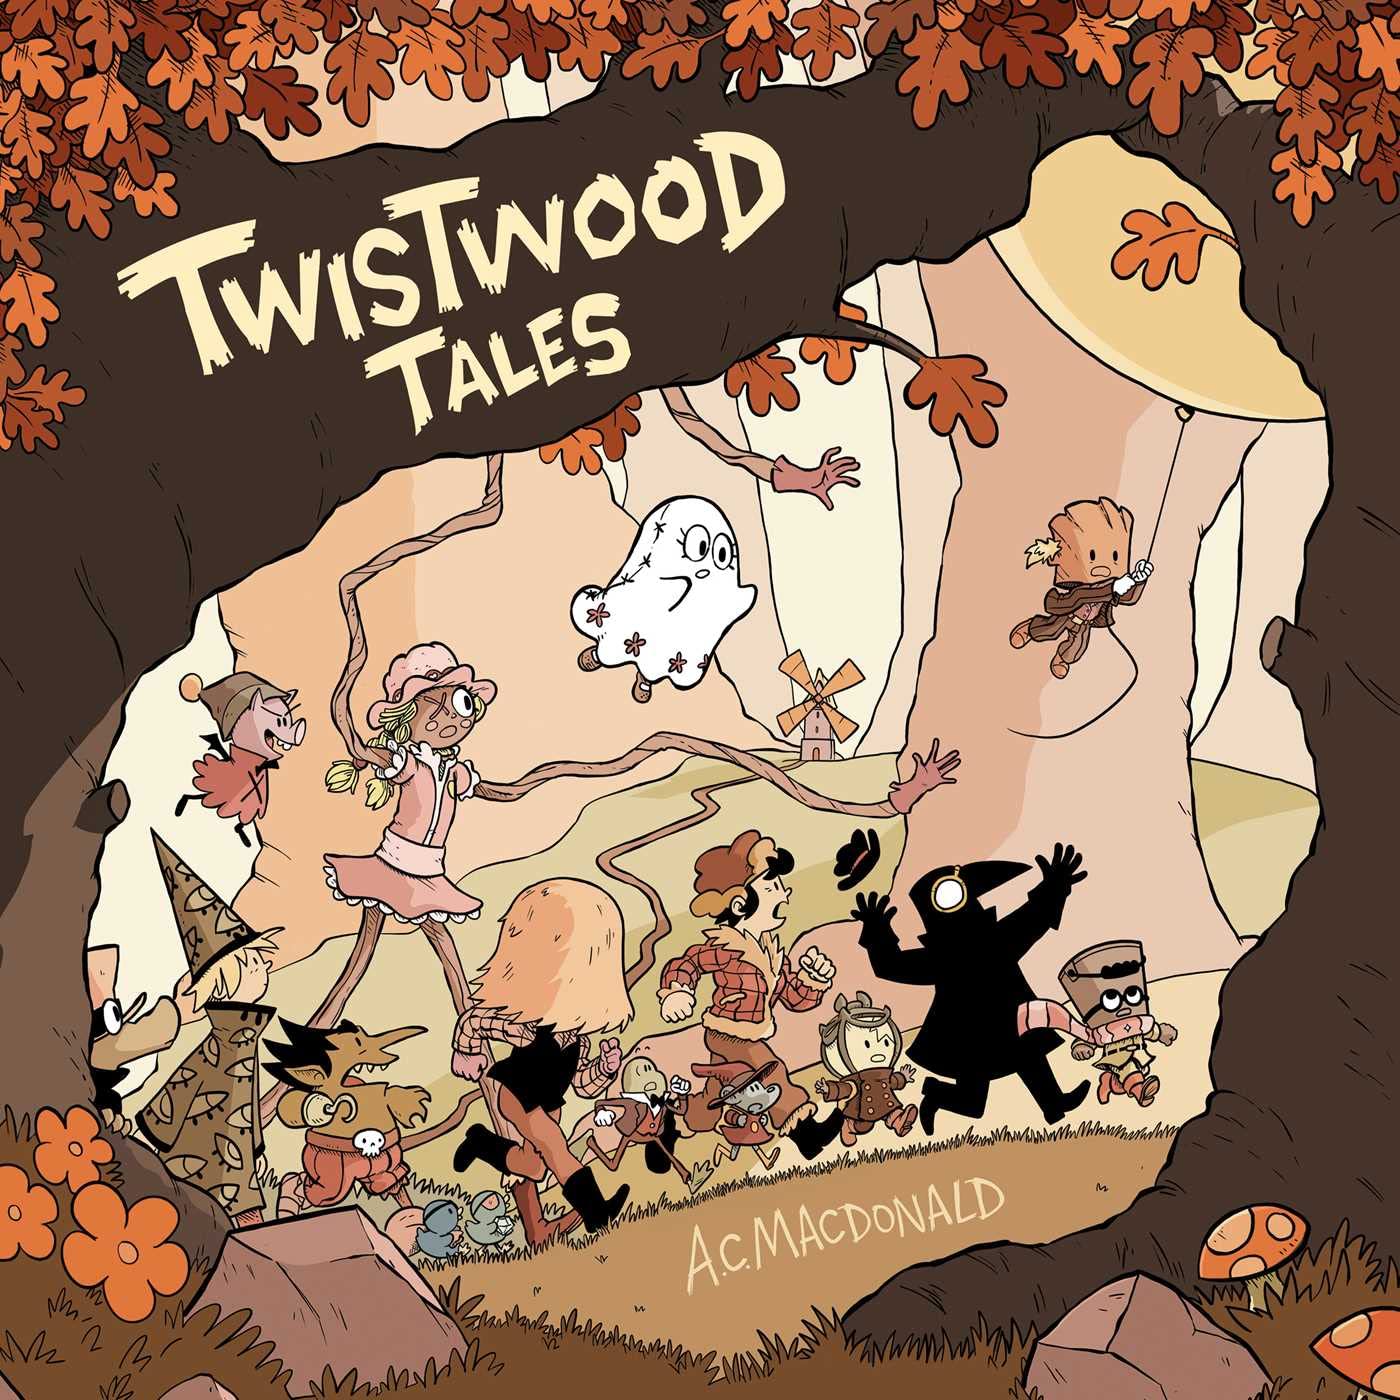 Capa da HQ "Twistwood Tales", de AC Macdonald. A obra entra na lista dos melhores quadrinhos de 2023.